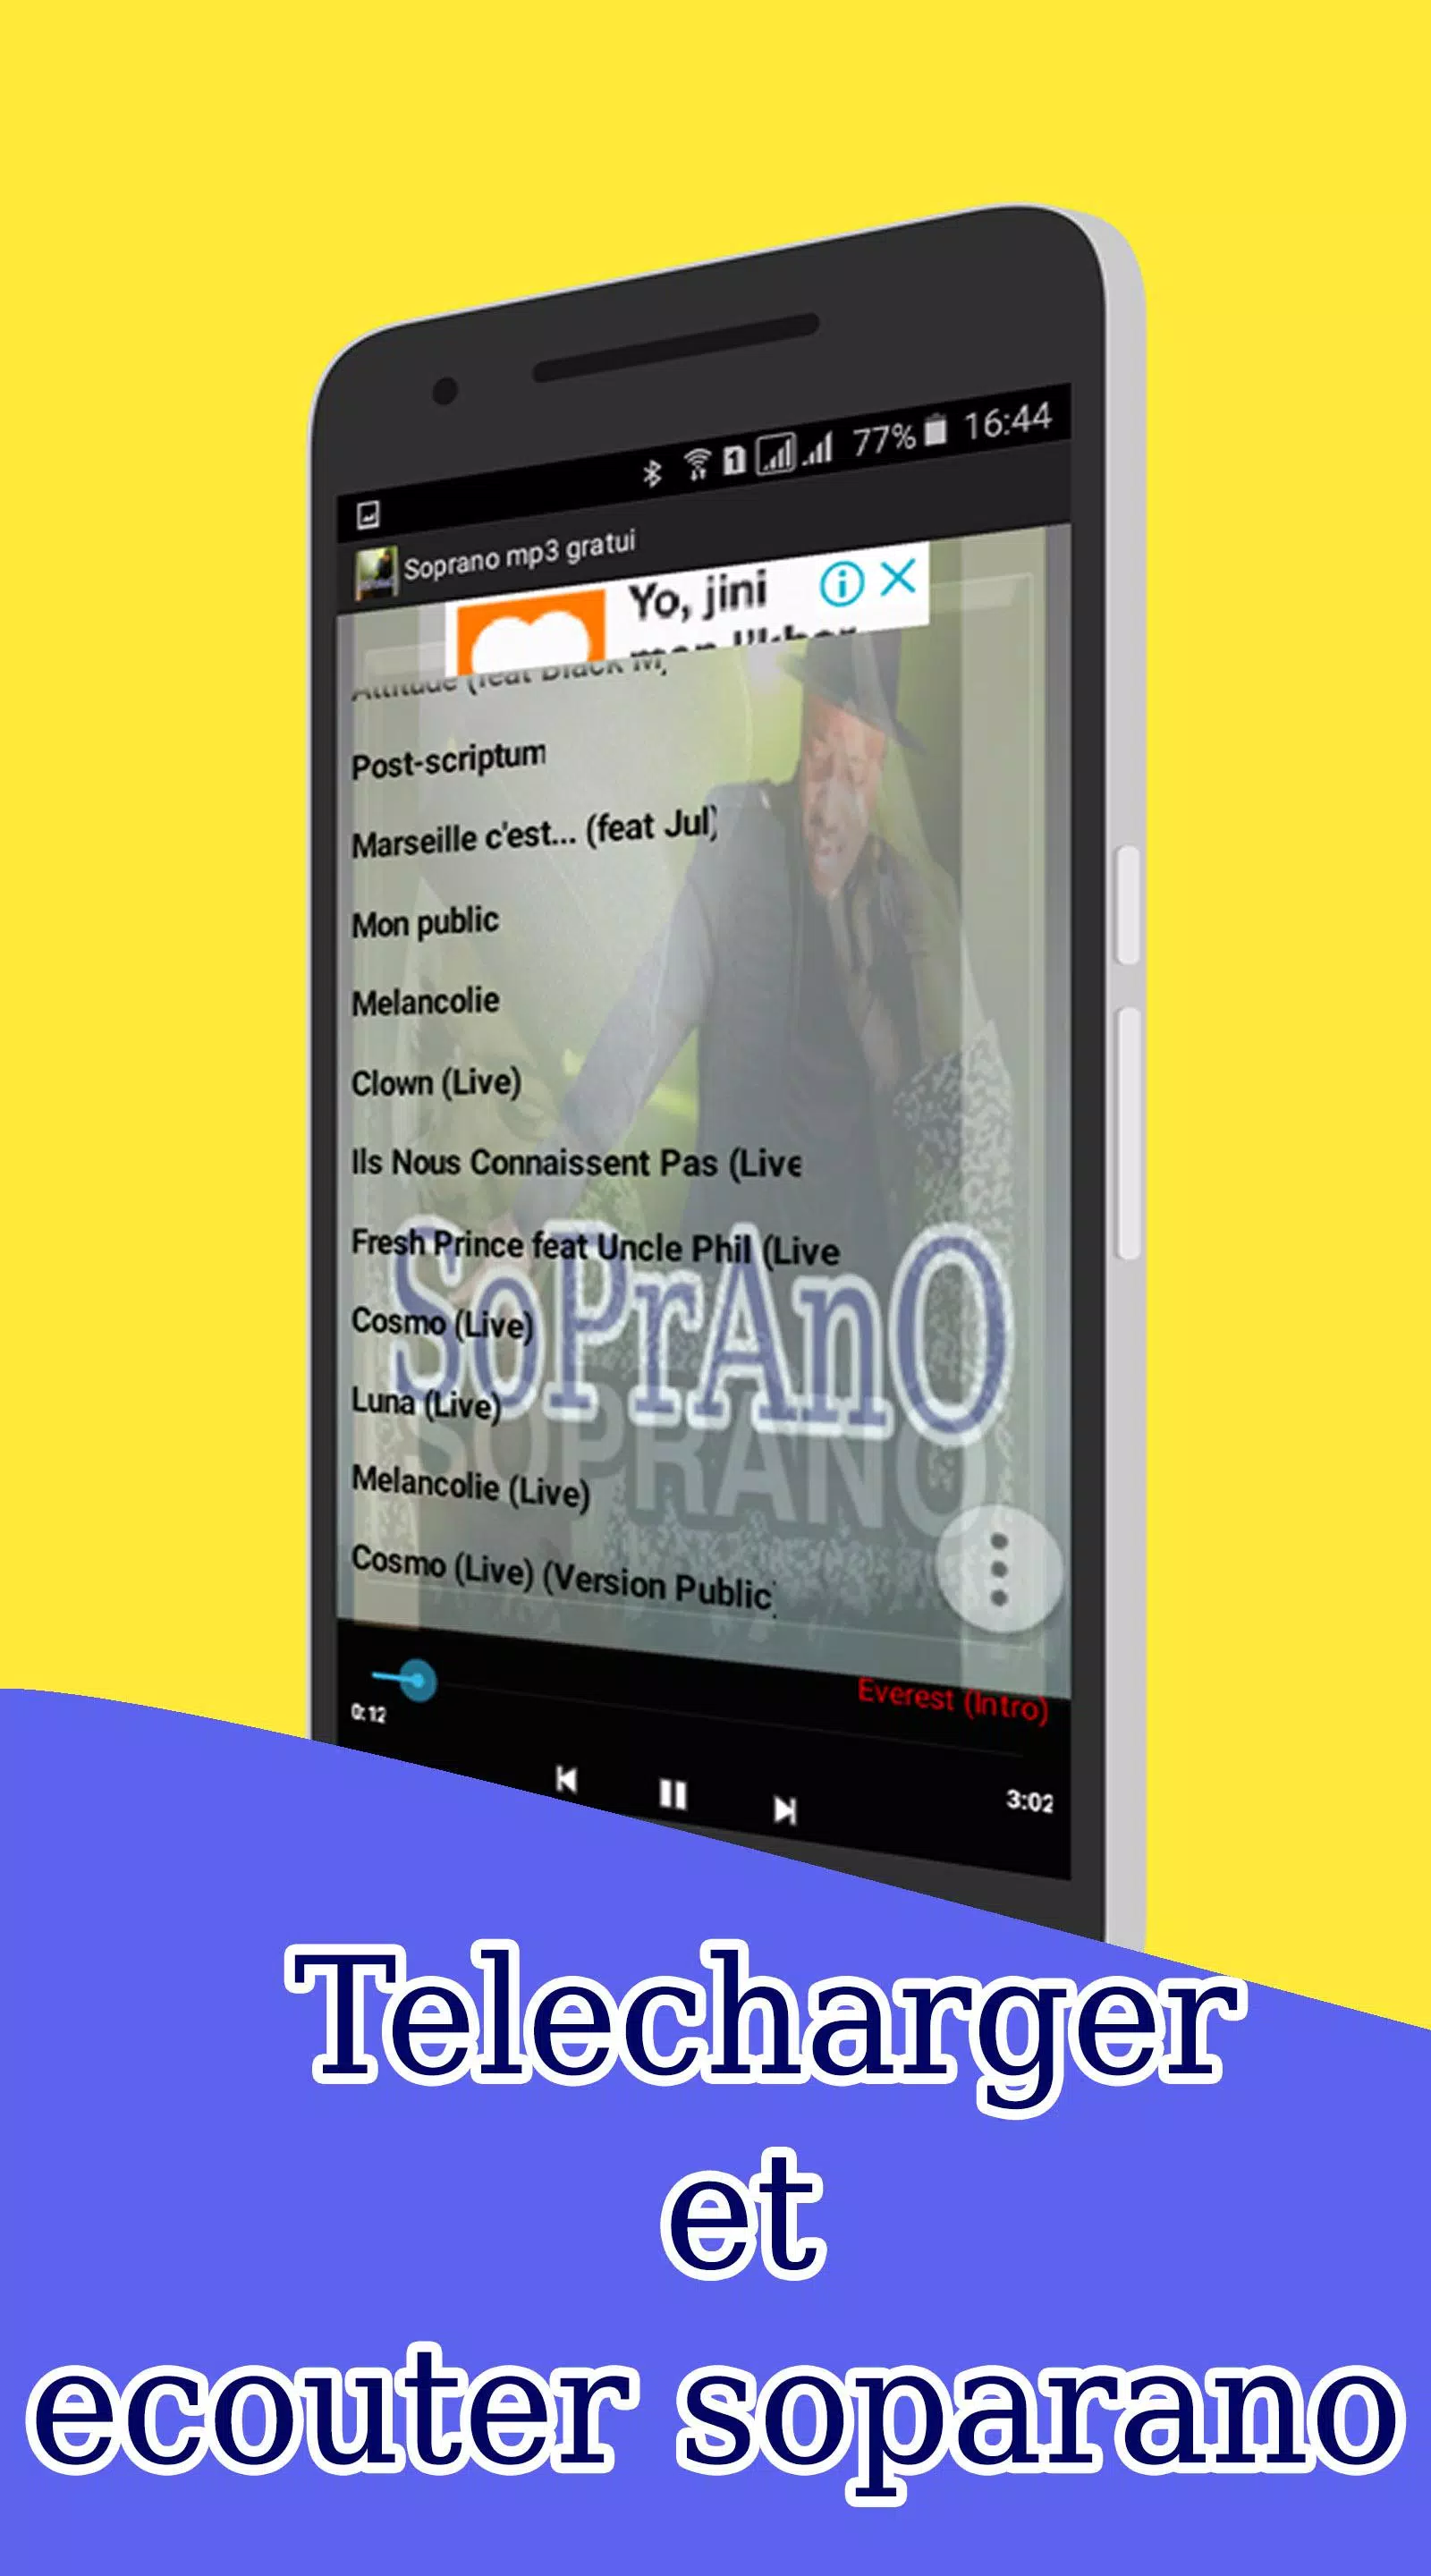 ecouter et telecharger soprano mp3 gratuit APK for Android Download